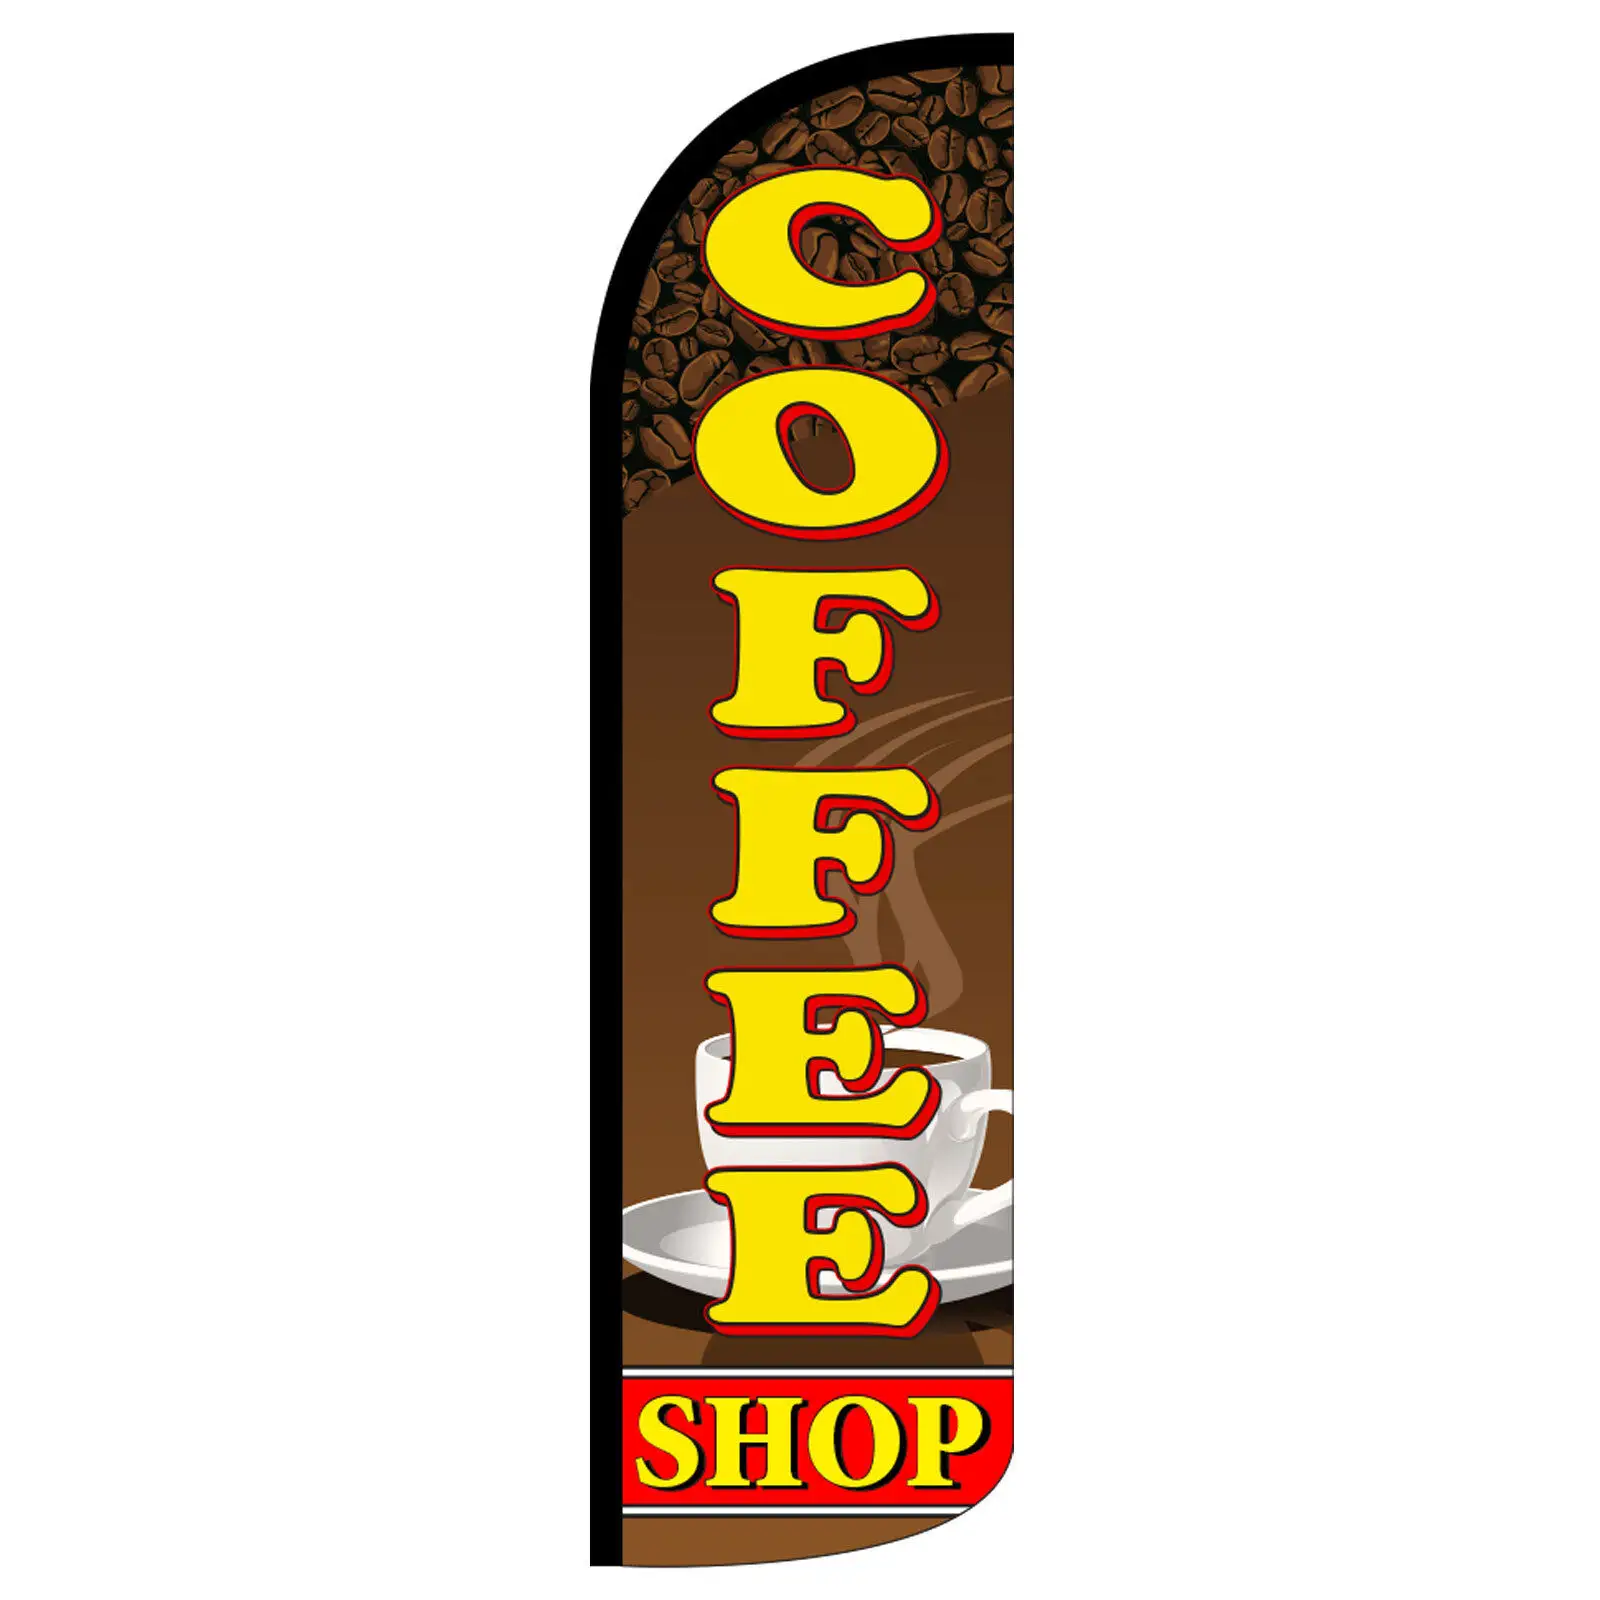 प्रोमोशनल उपयोग कैफे कॉफी जेलाटो स्टोर फ्रंट अब ओपन सेल बीच फेदर फ्लैग